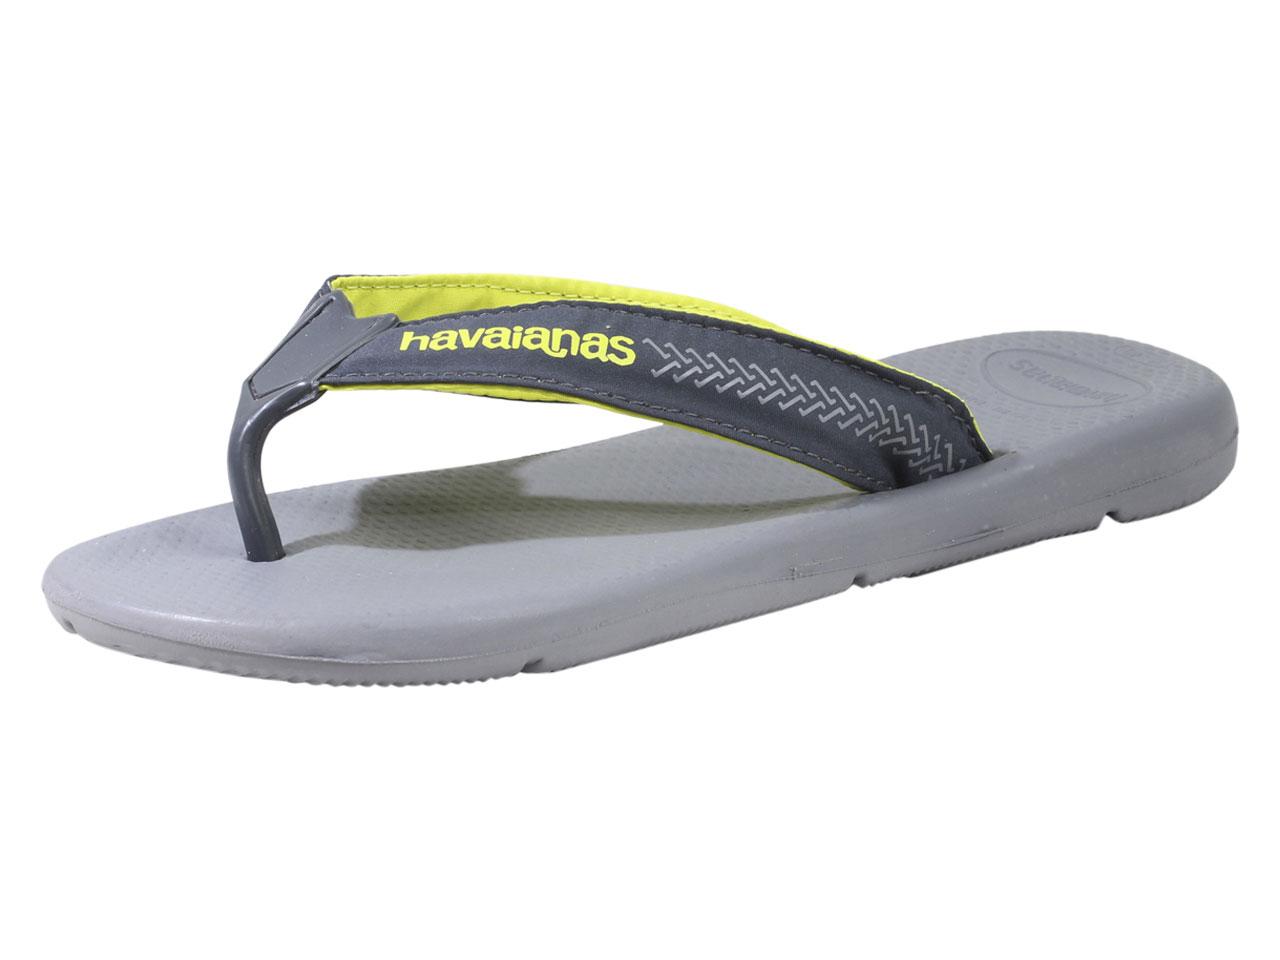 Havaianas Men's Surf Pro Flip Flops Sandals Shoes - Steel Grey/Grey - 11 12 D(M) US